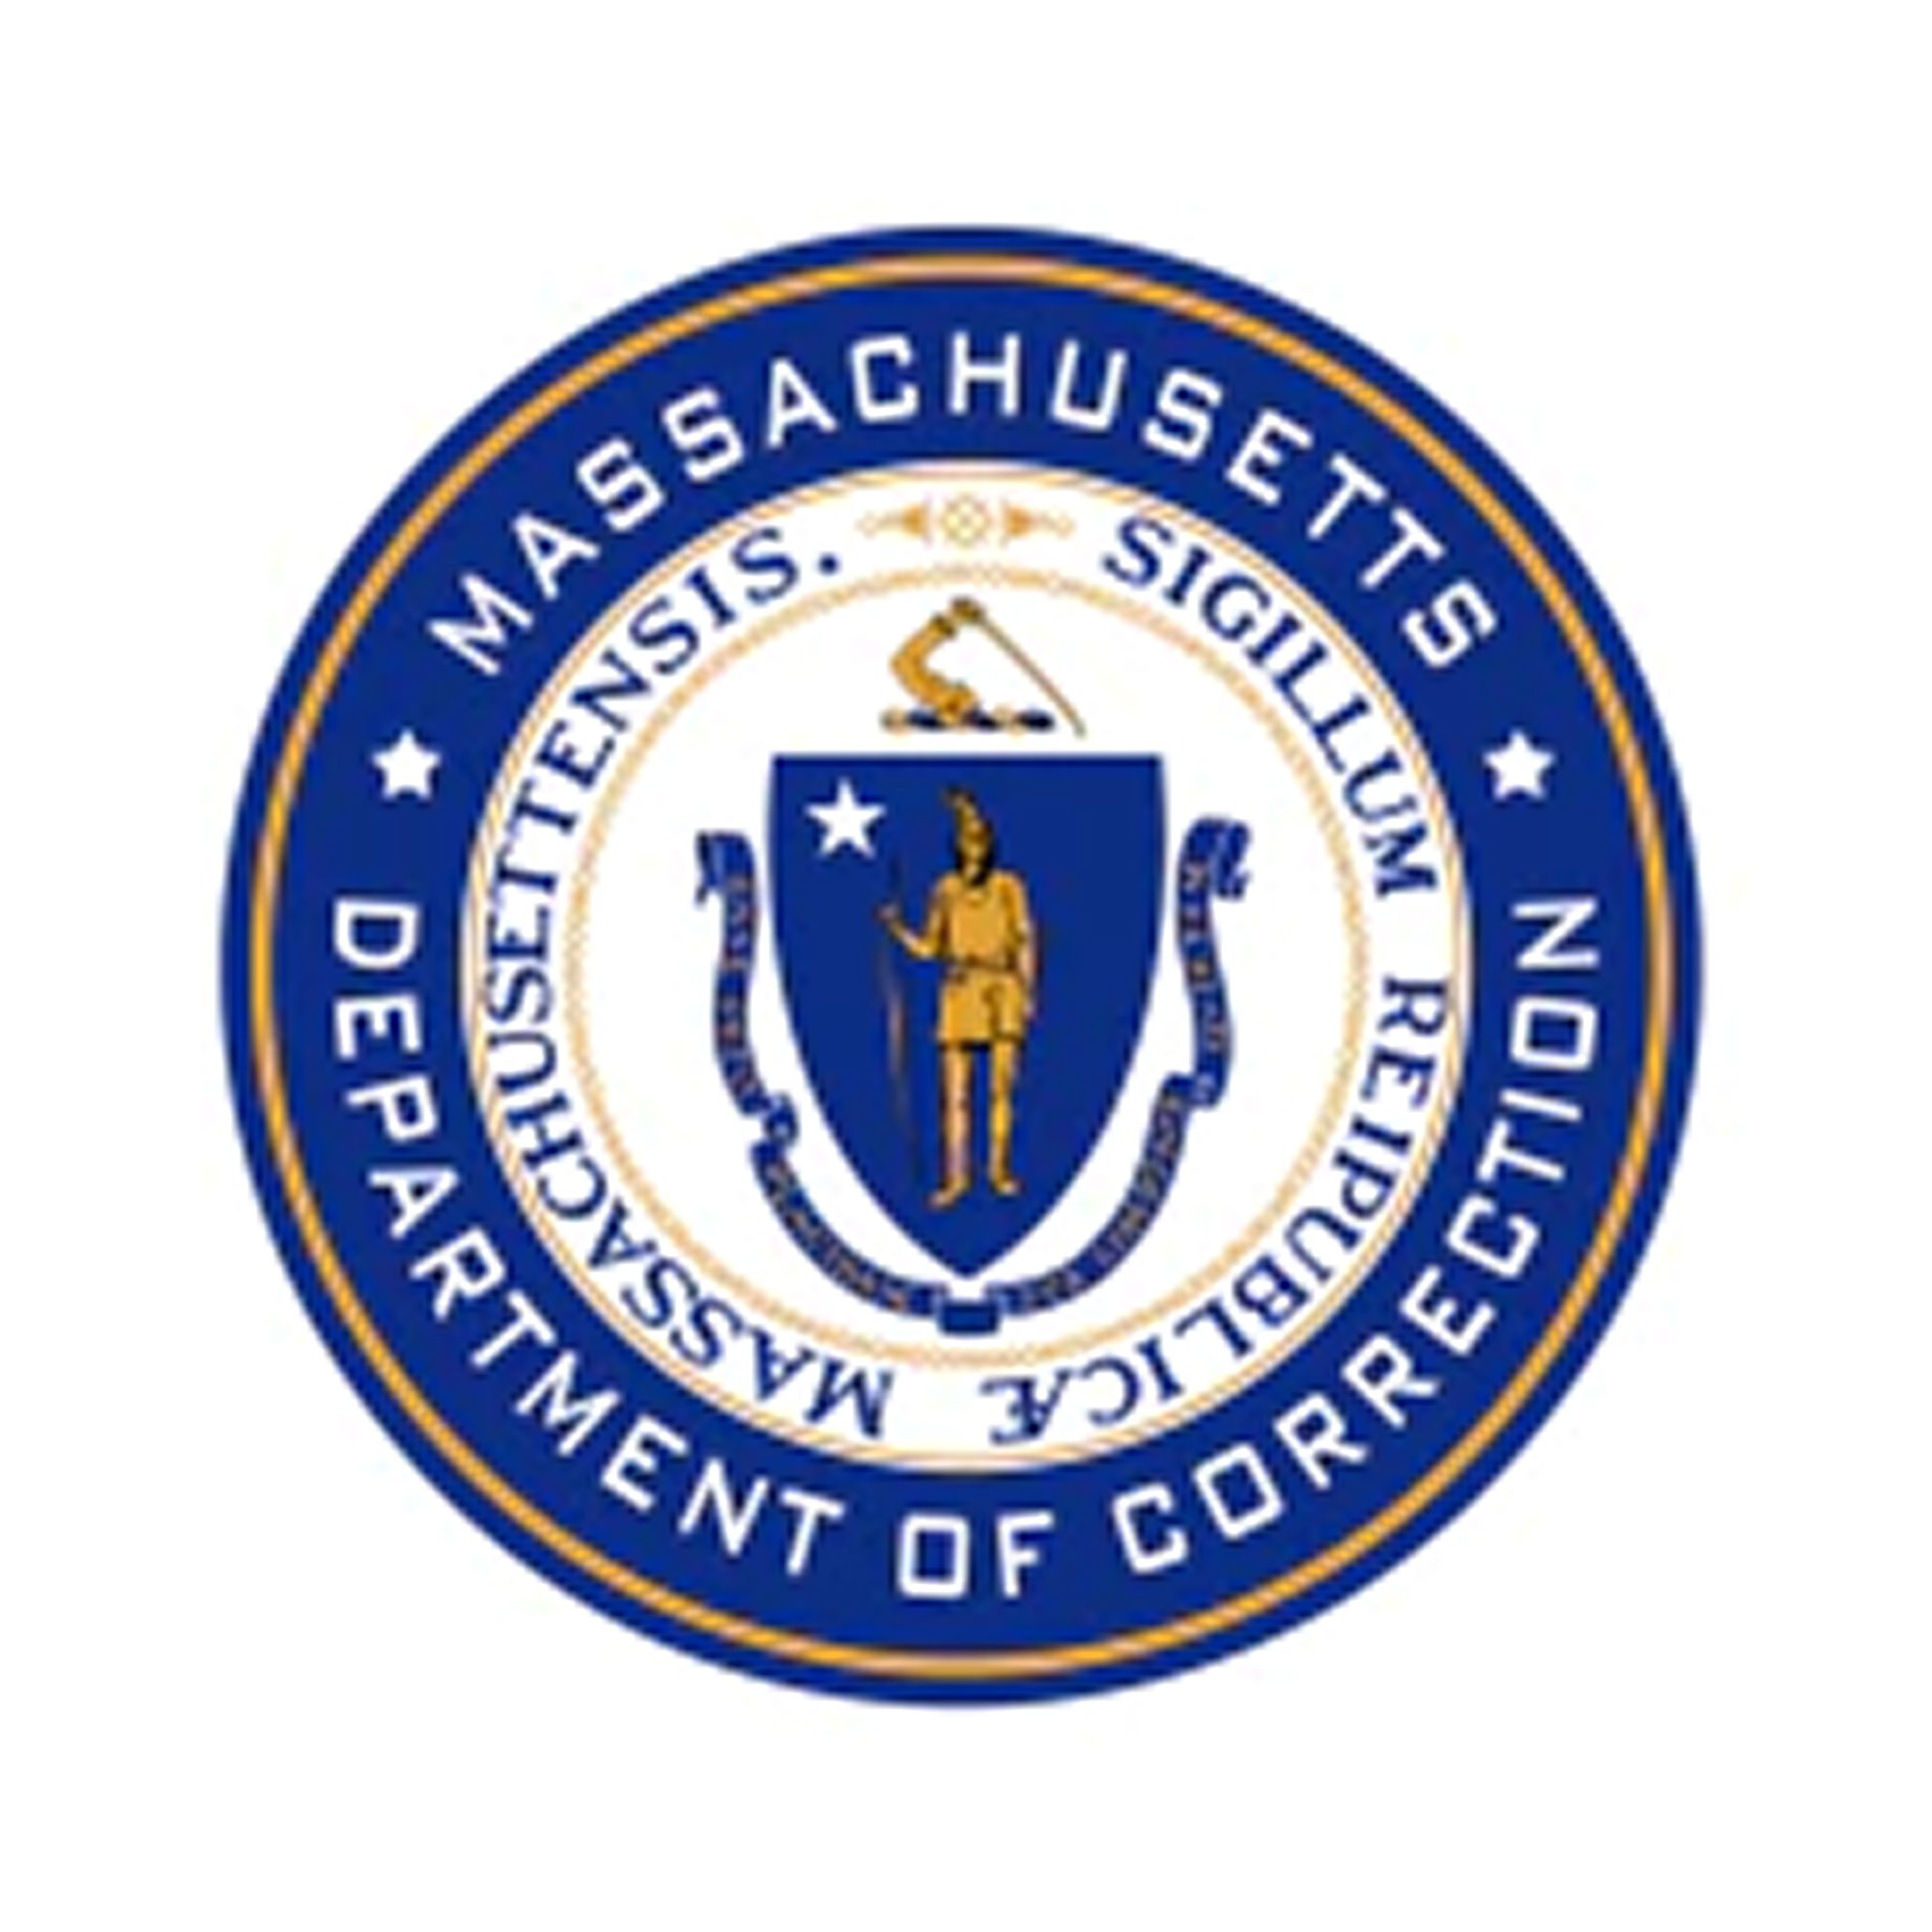 image of Mass Dept of Corrections logo